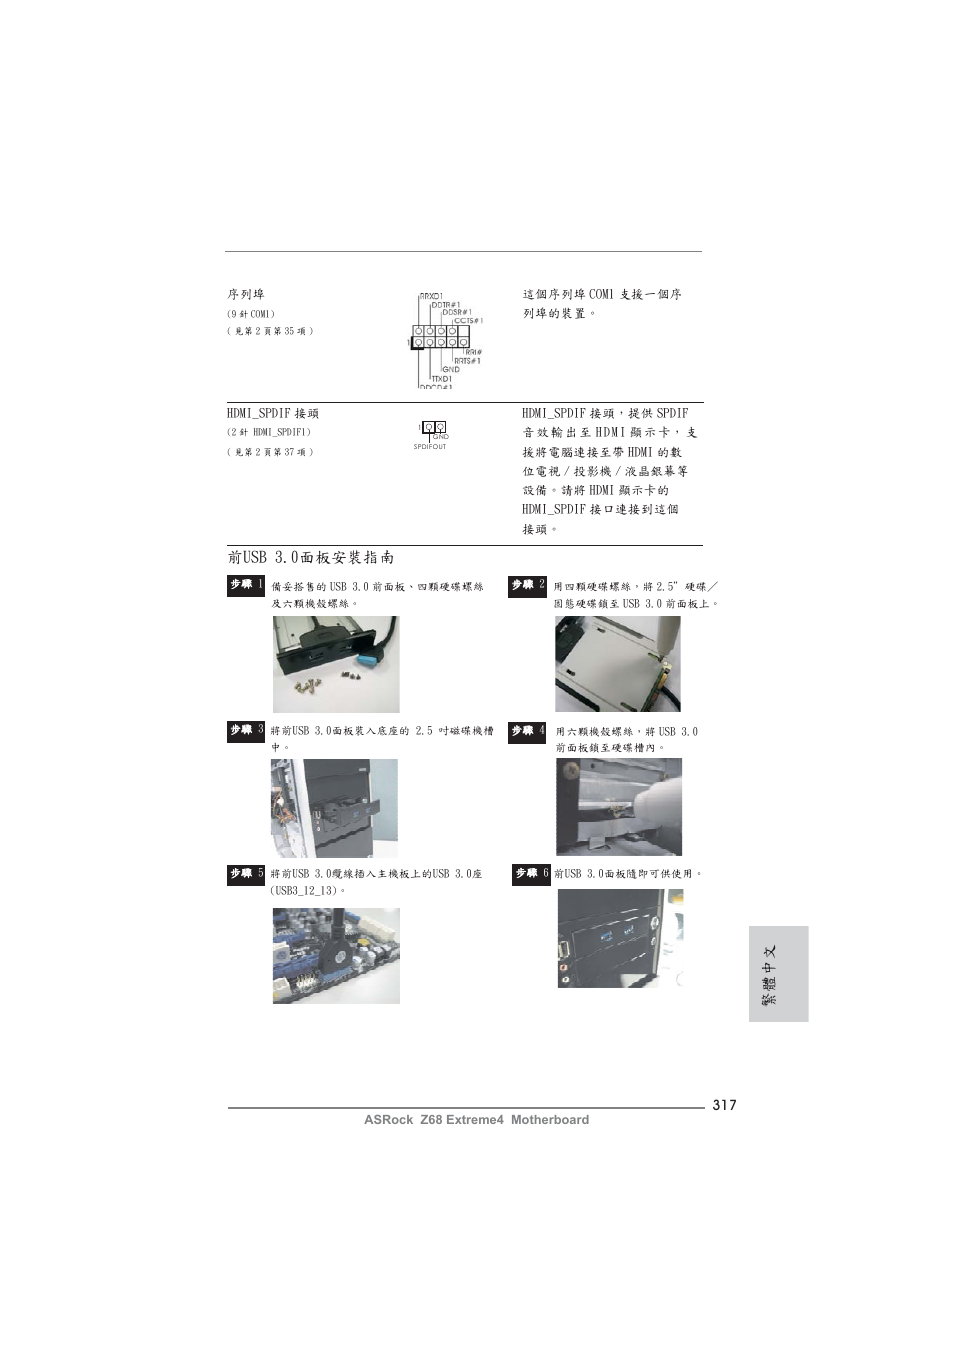 繁體中文, 前usb 3.0面板安裝指南| ASRock Z68 Extreme4 User Manual | Page 317 / 322 |  Original mode